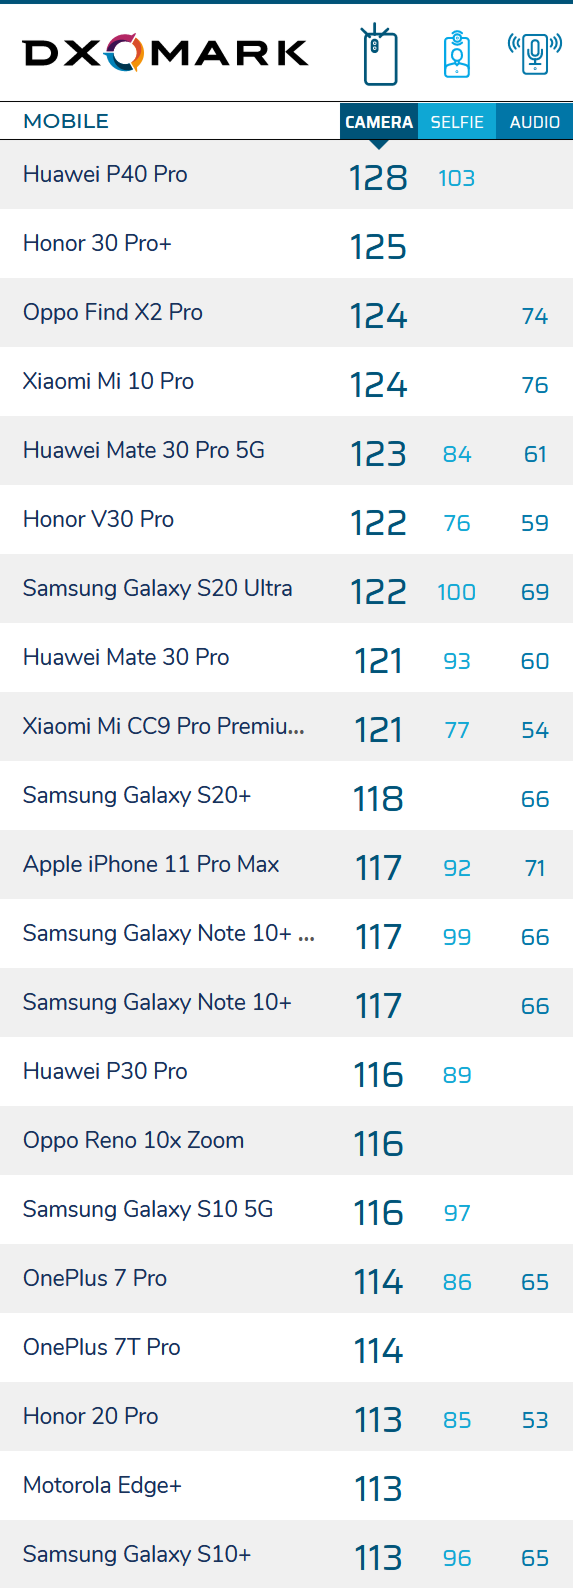 Screenshot_2020-06-02 Smartphone Reviews - DXOMARK.png